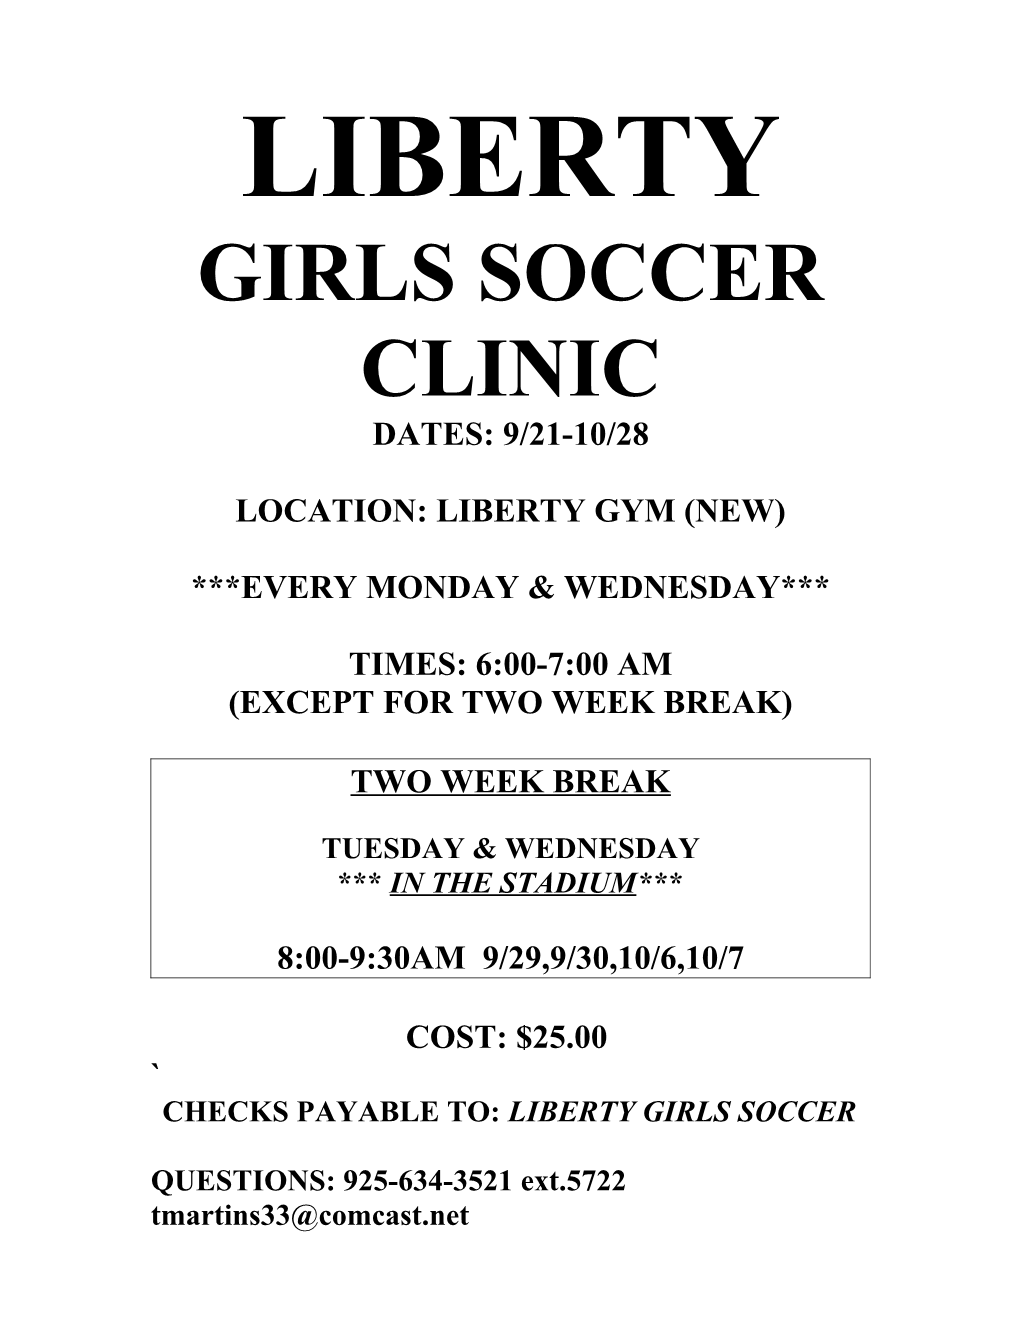 Liberty Soccer Clinic 2011 Camp Fee $25